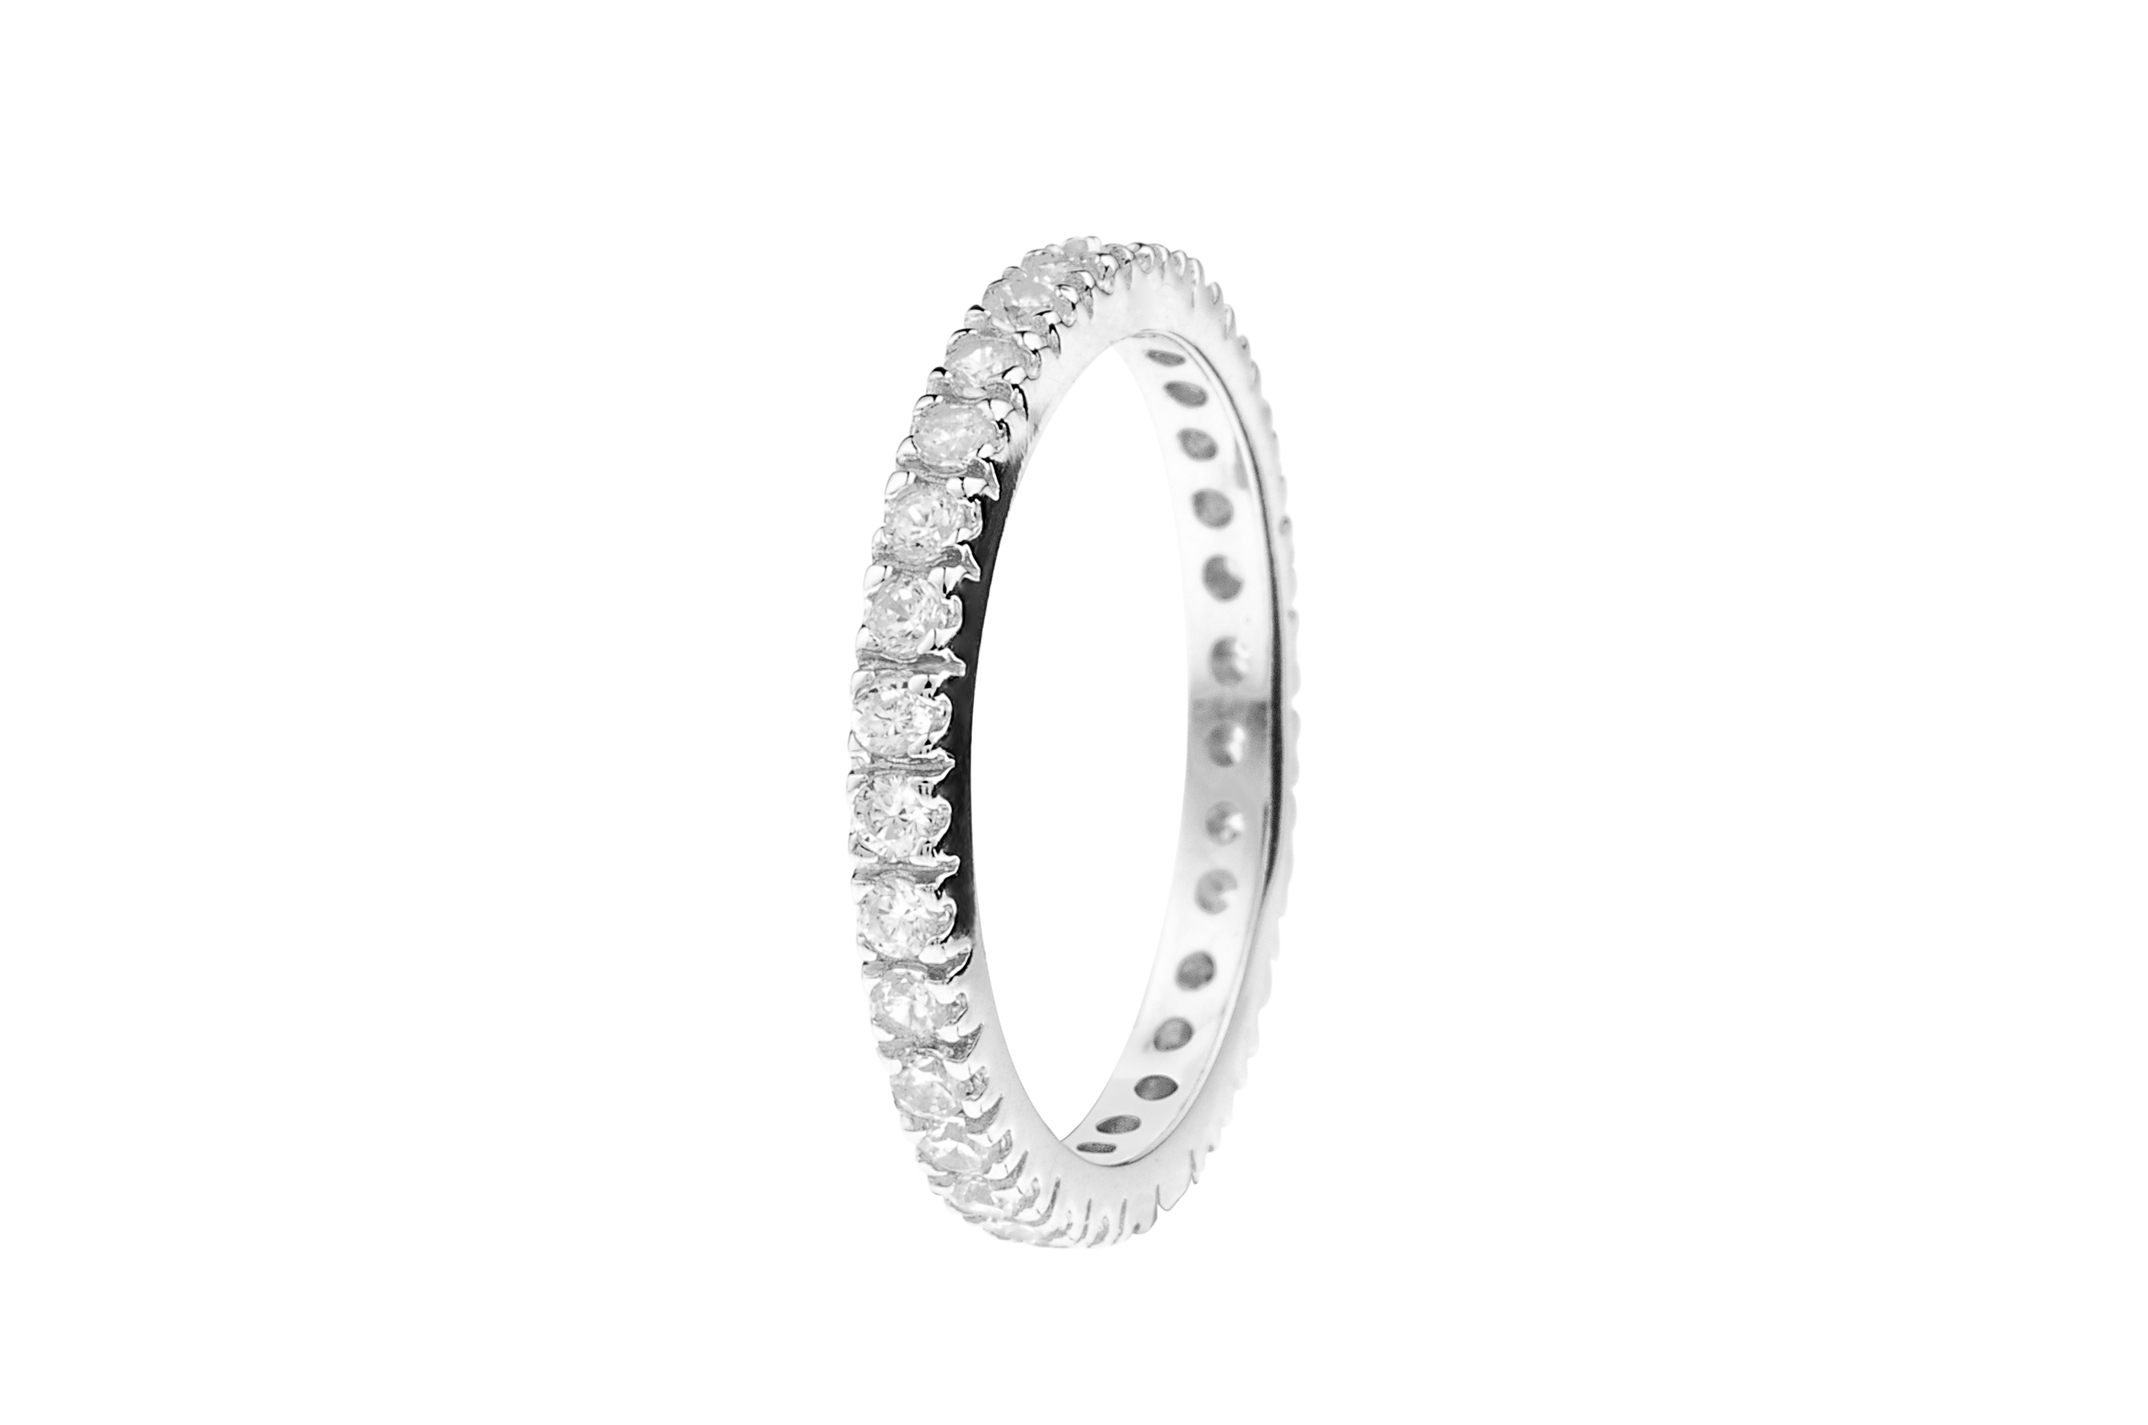 Joia: anel;Material: prata 925;Pedras: zircónias;Cor: branco;Género: mulher